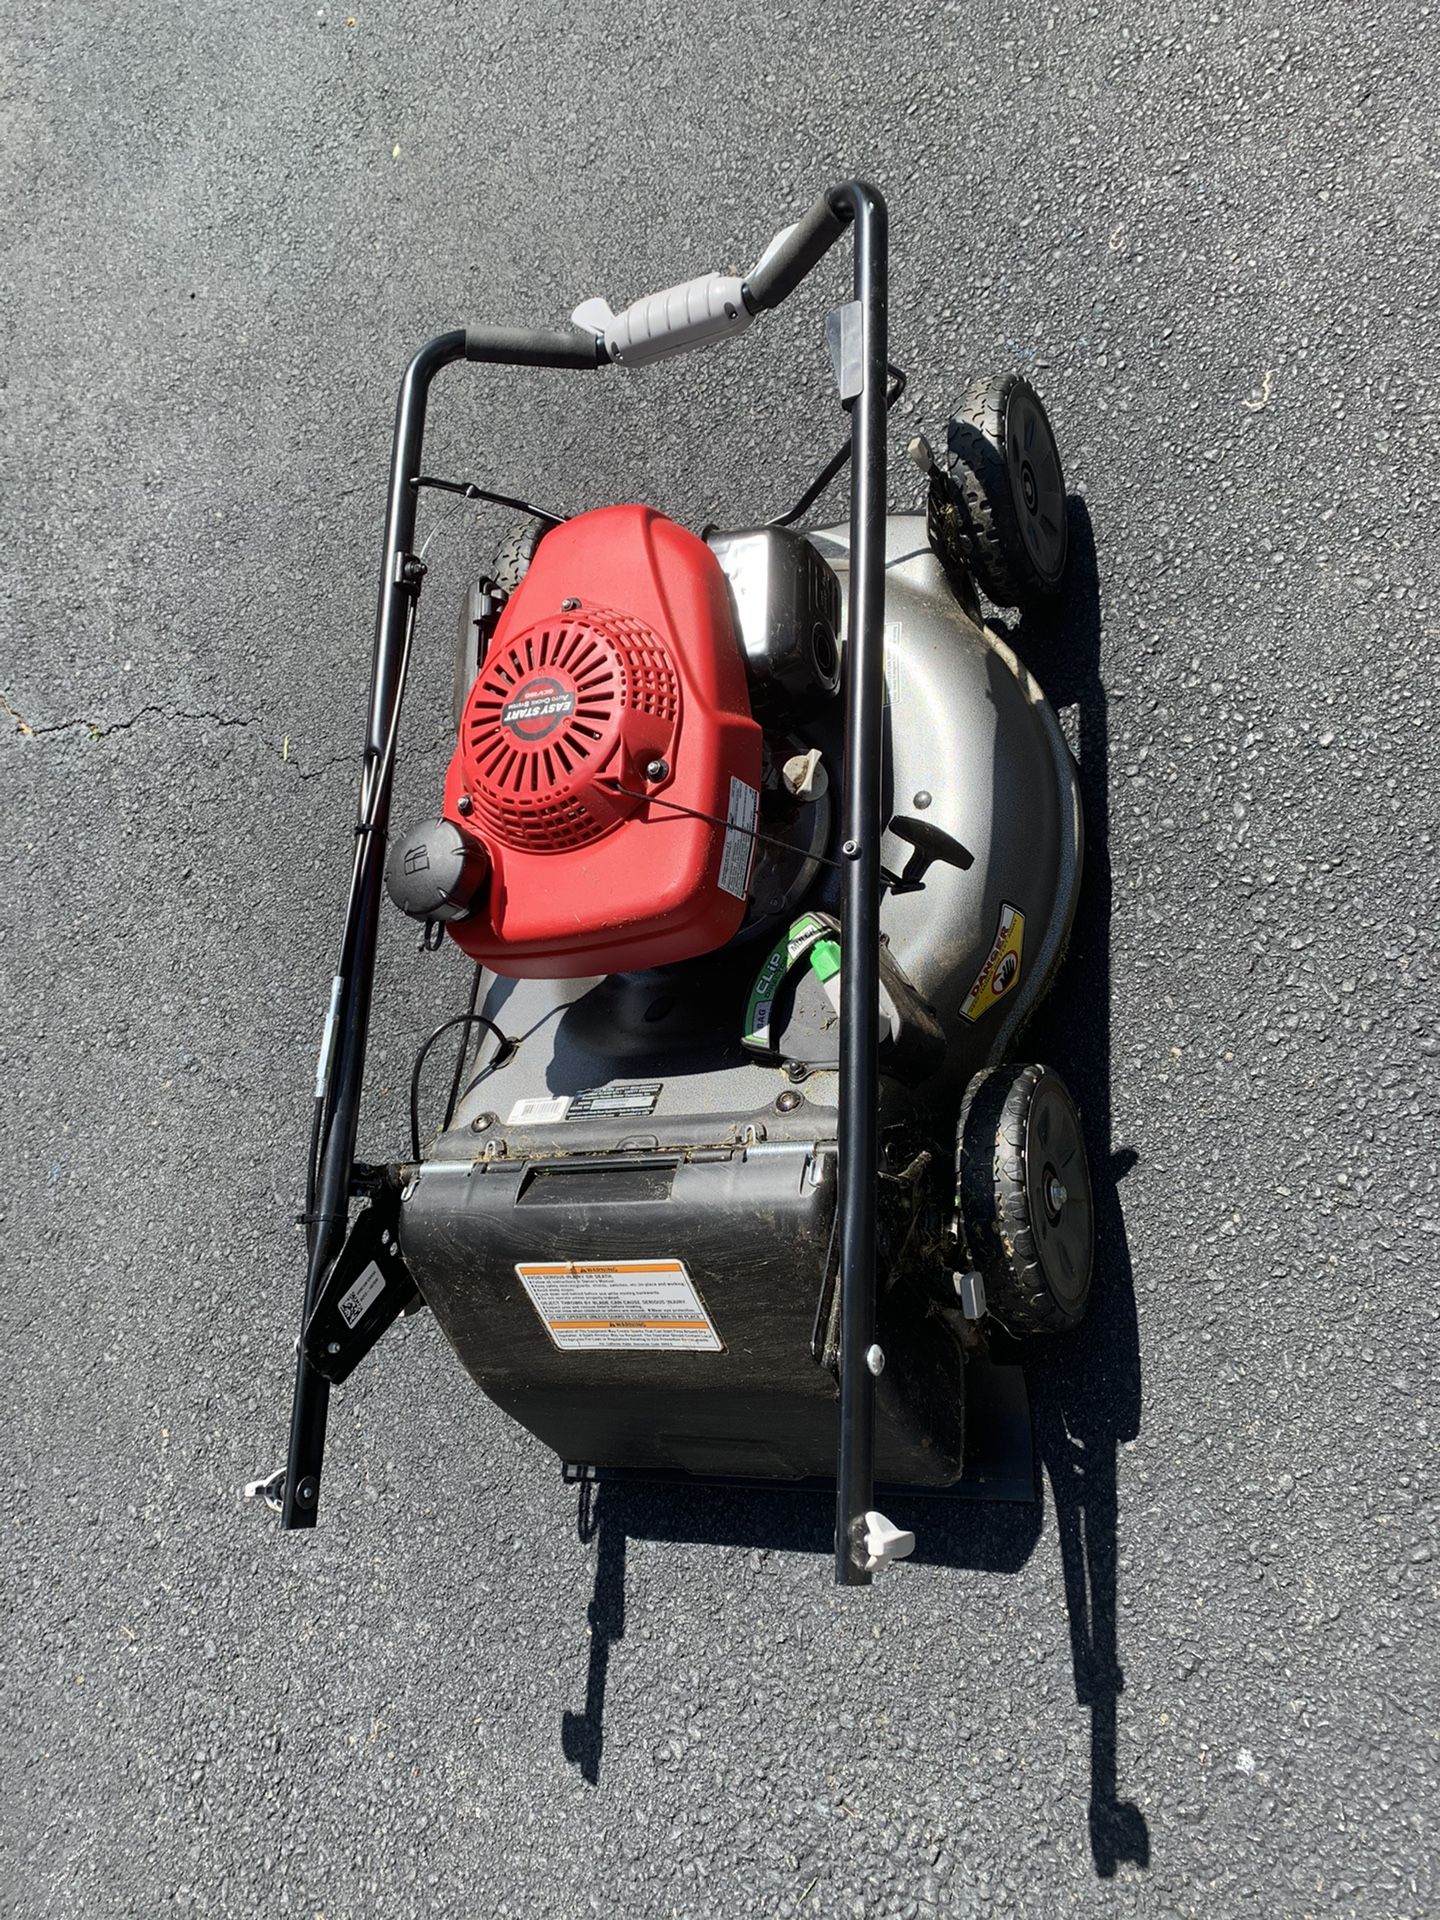 Honda HHR216VKA Lawn Mower - 1 year old